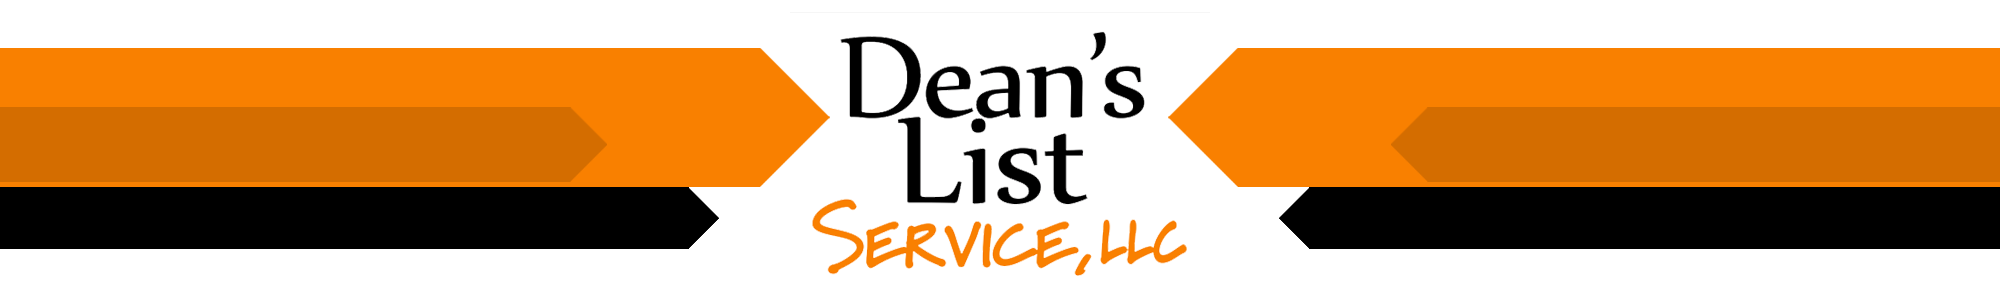 Dean's List Service Logo Banner